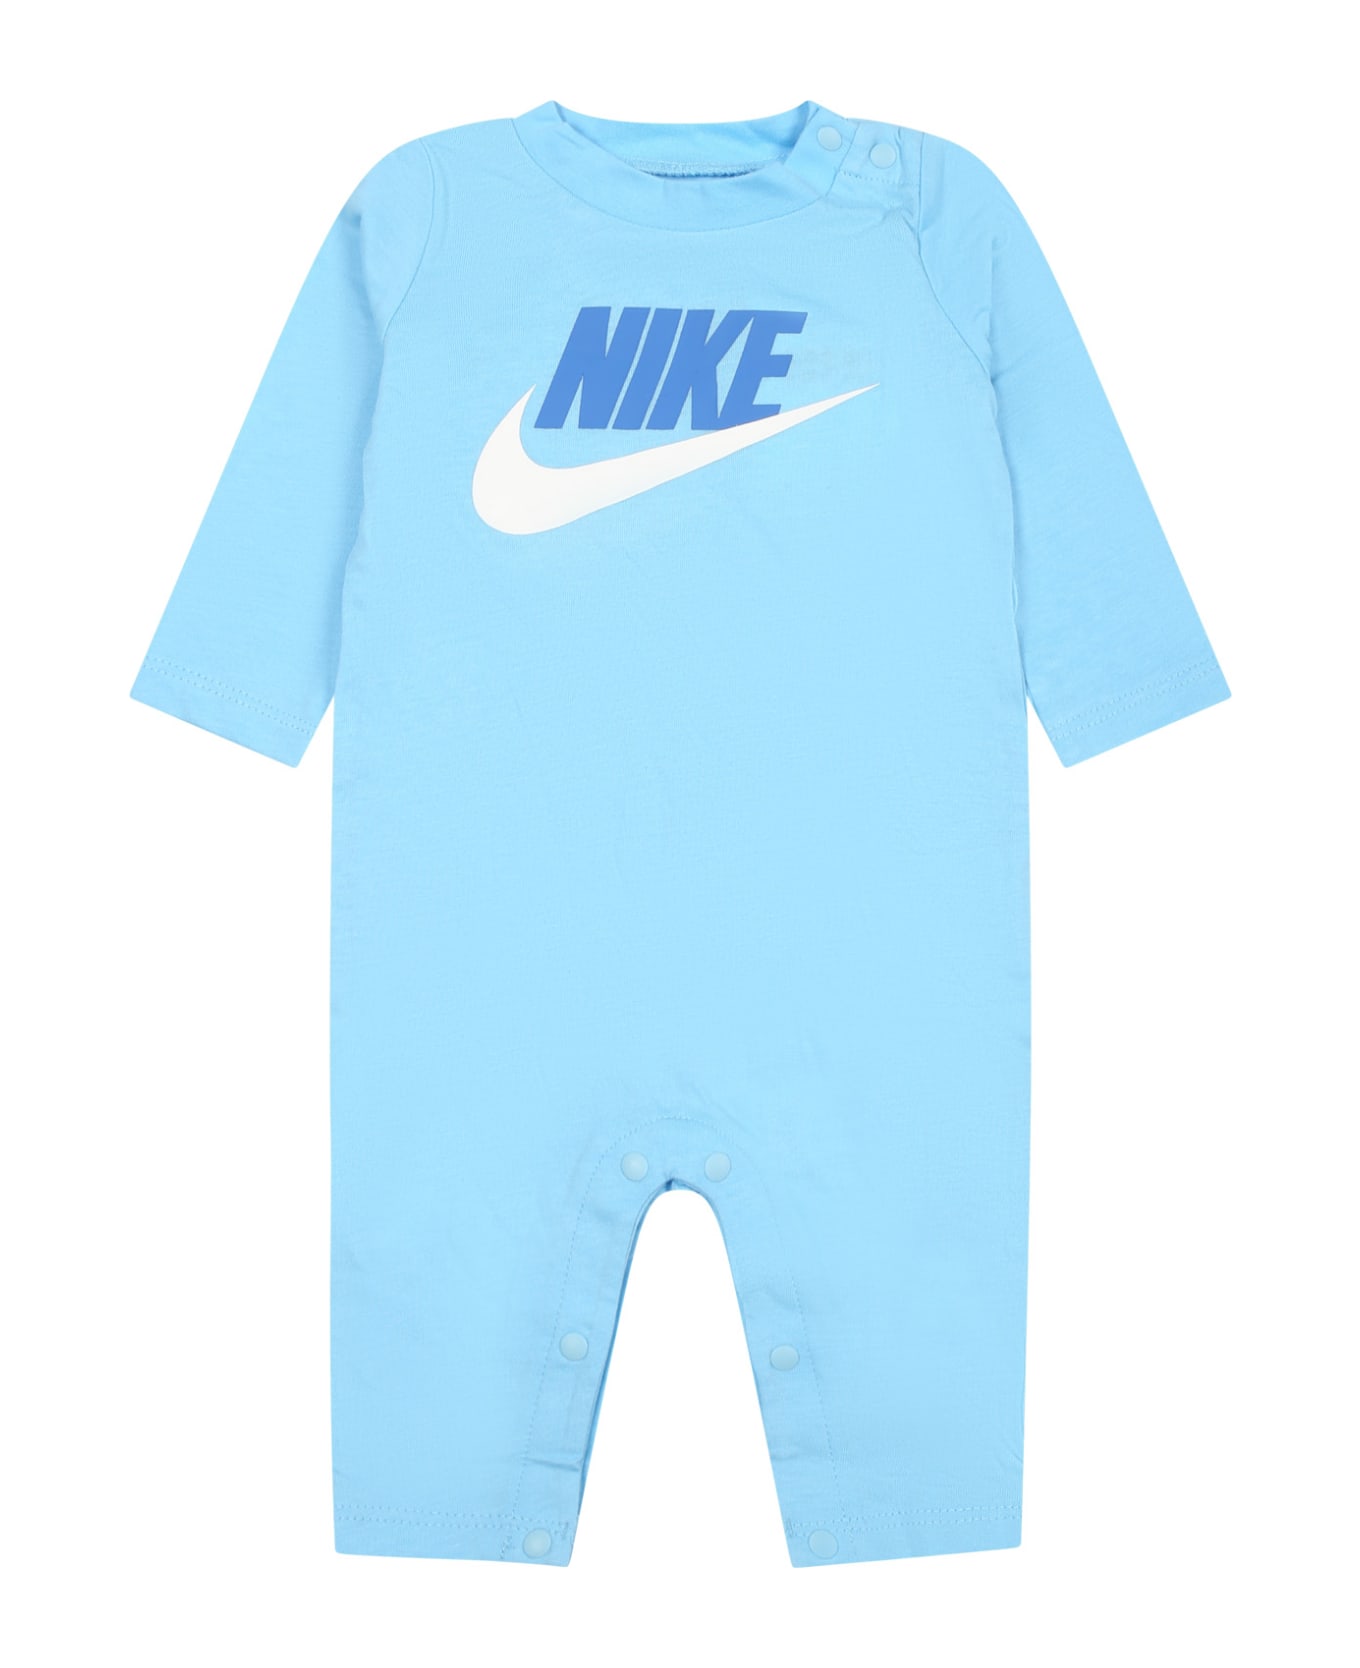 Nike Light Blue Babygrow For Baby Boy With Swoosh - Light Blue